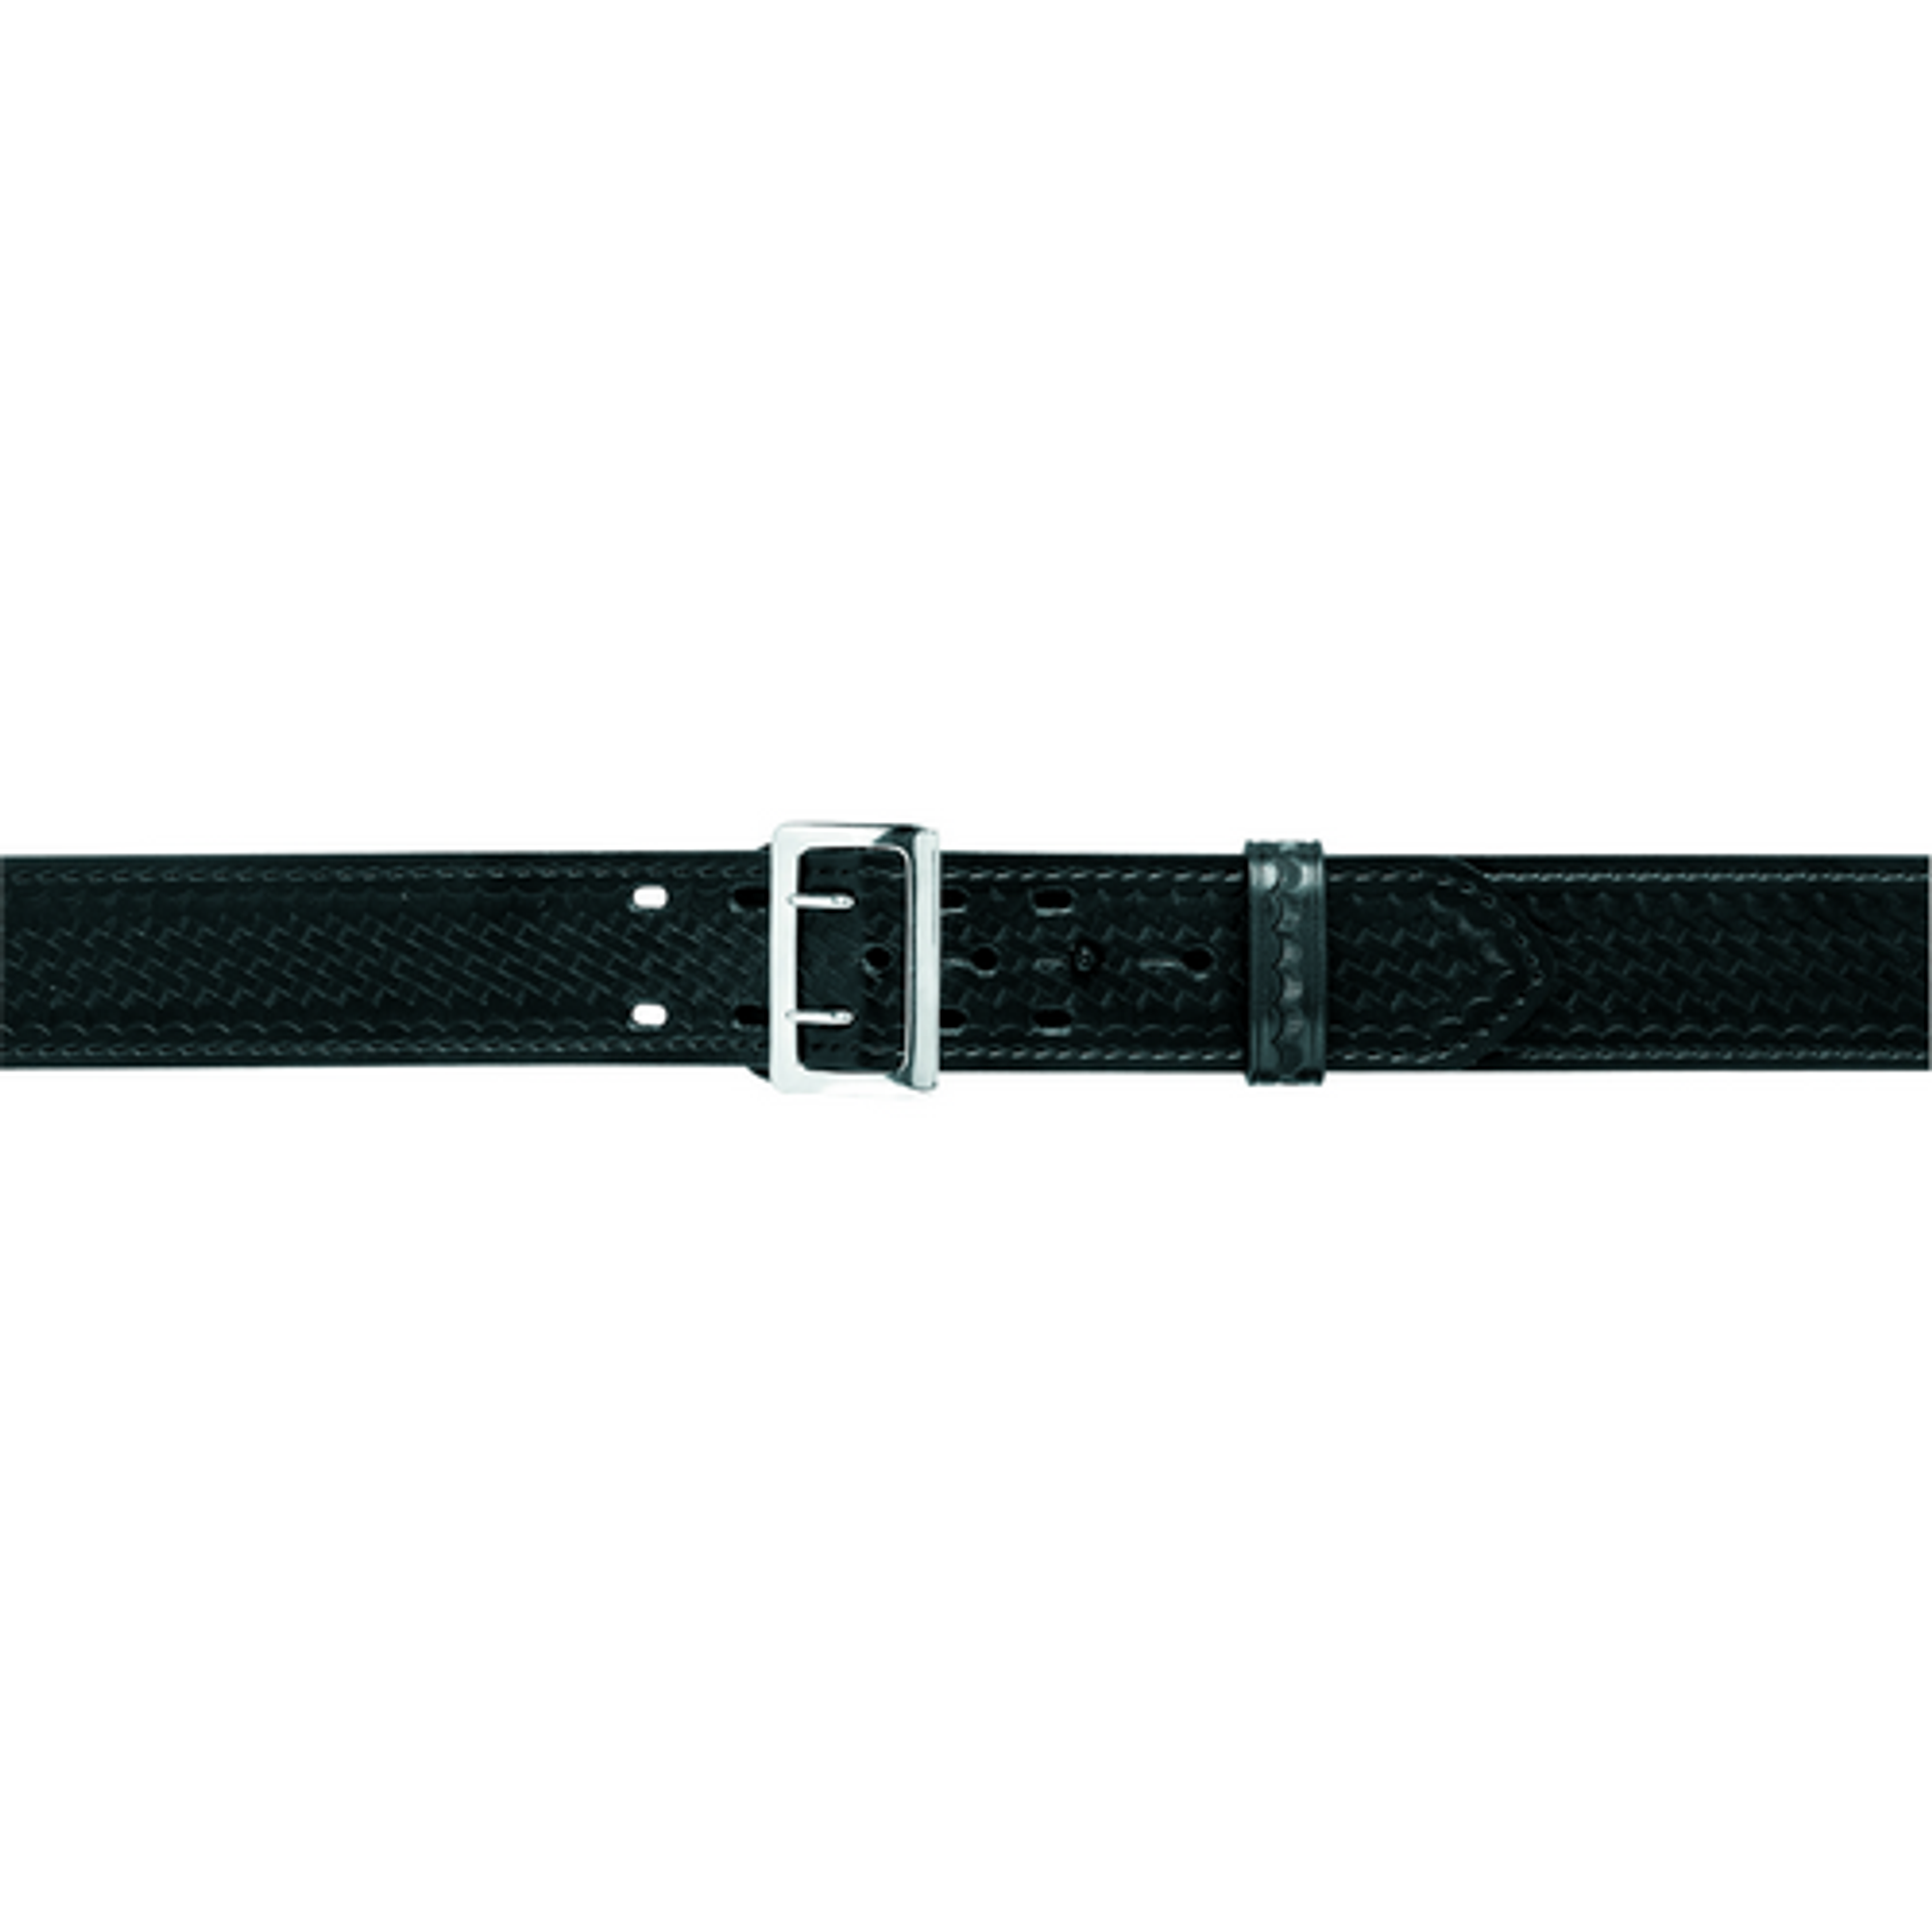 87 - Sam Browne Buckled Duty Belt, 2.25 (58mm) - KR87-46-6